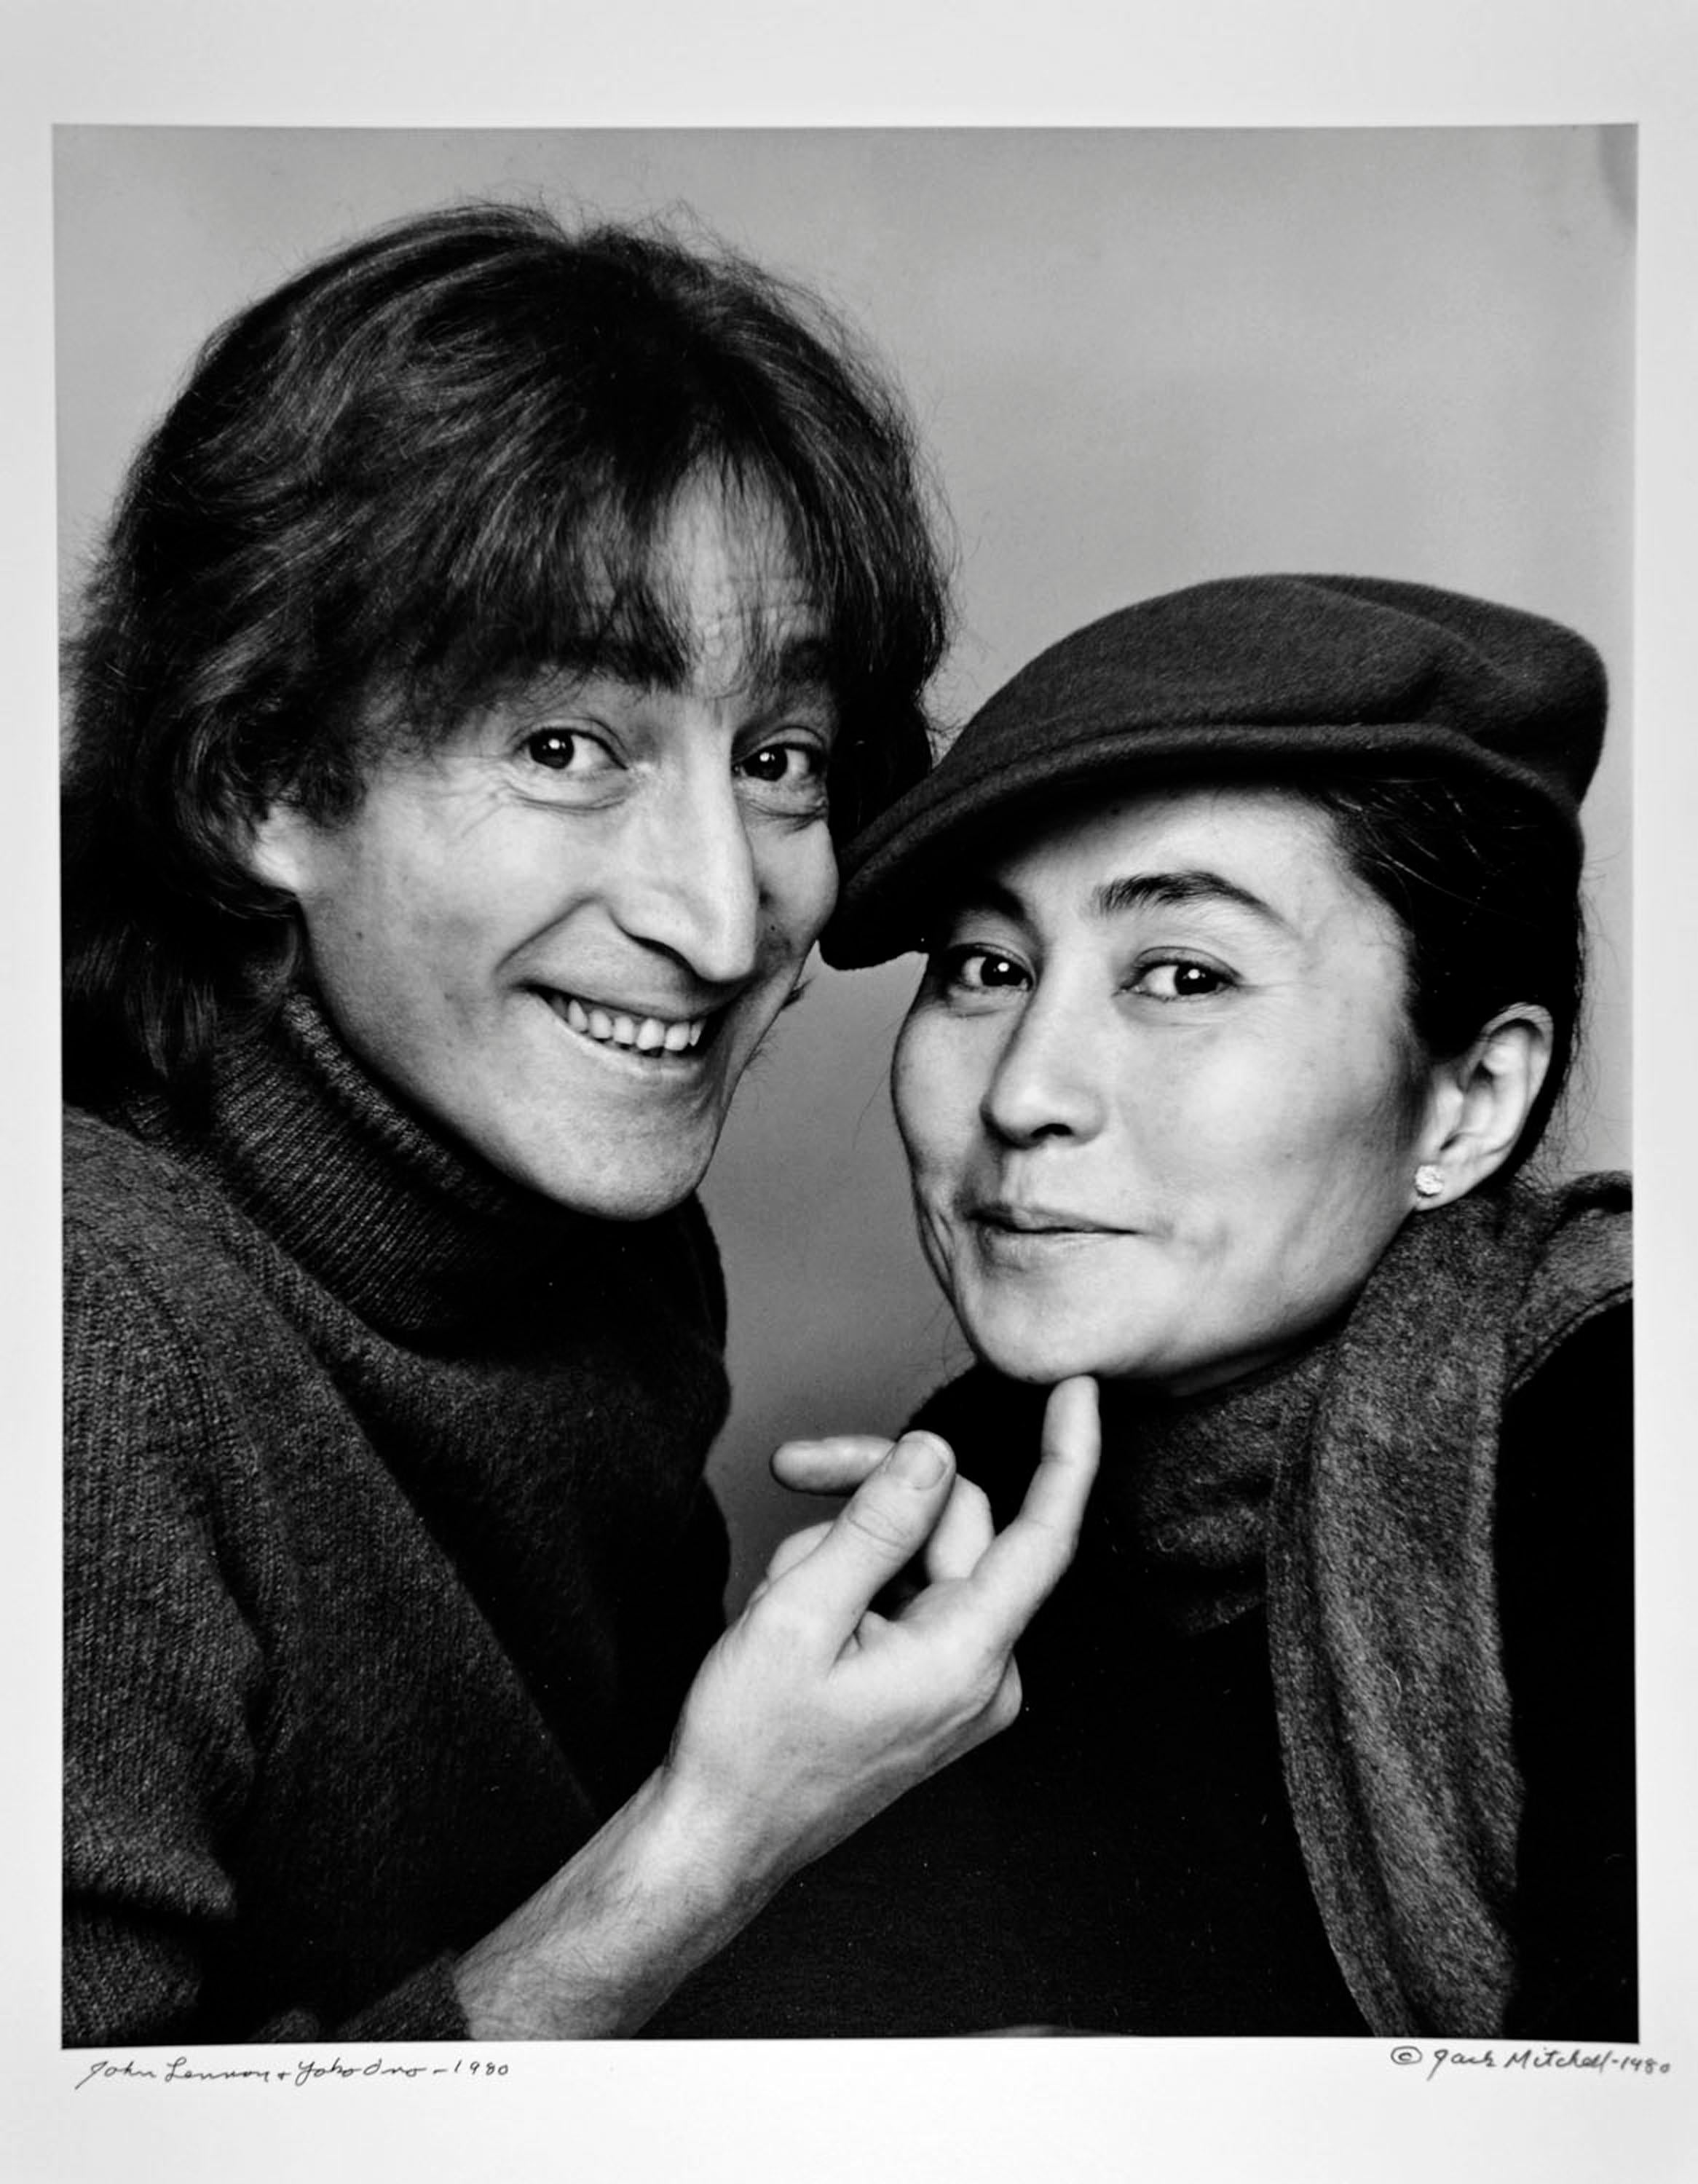 John Lennon et Yoko Ono photographiés le 2 novembre, signés